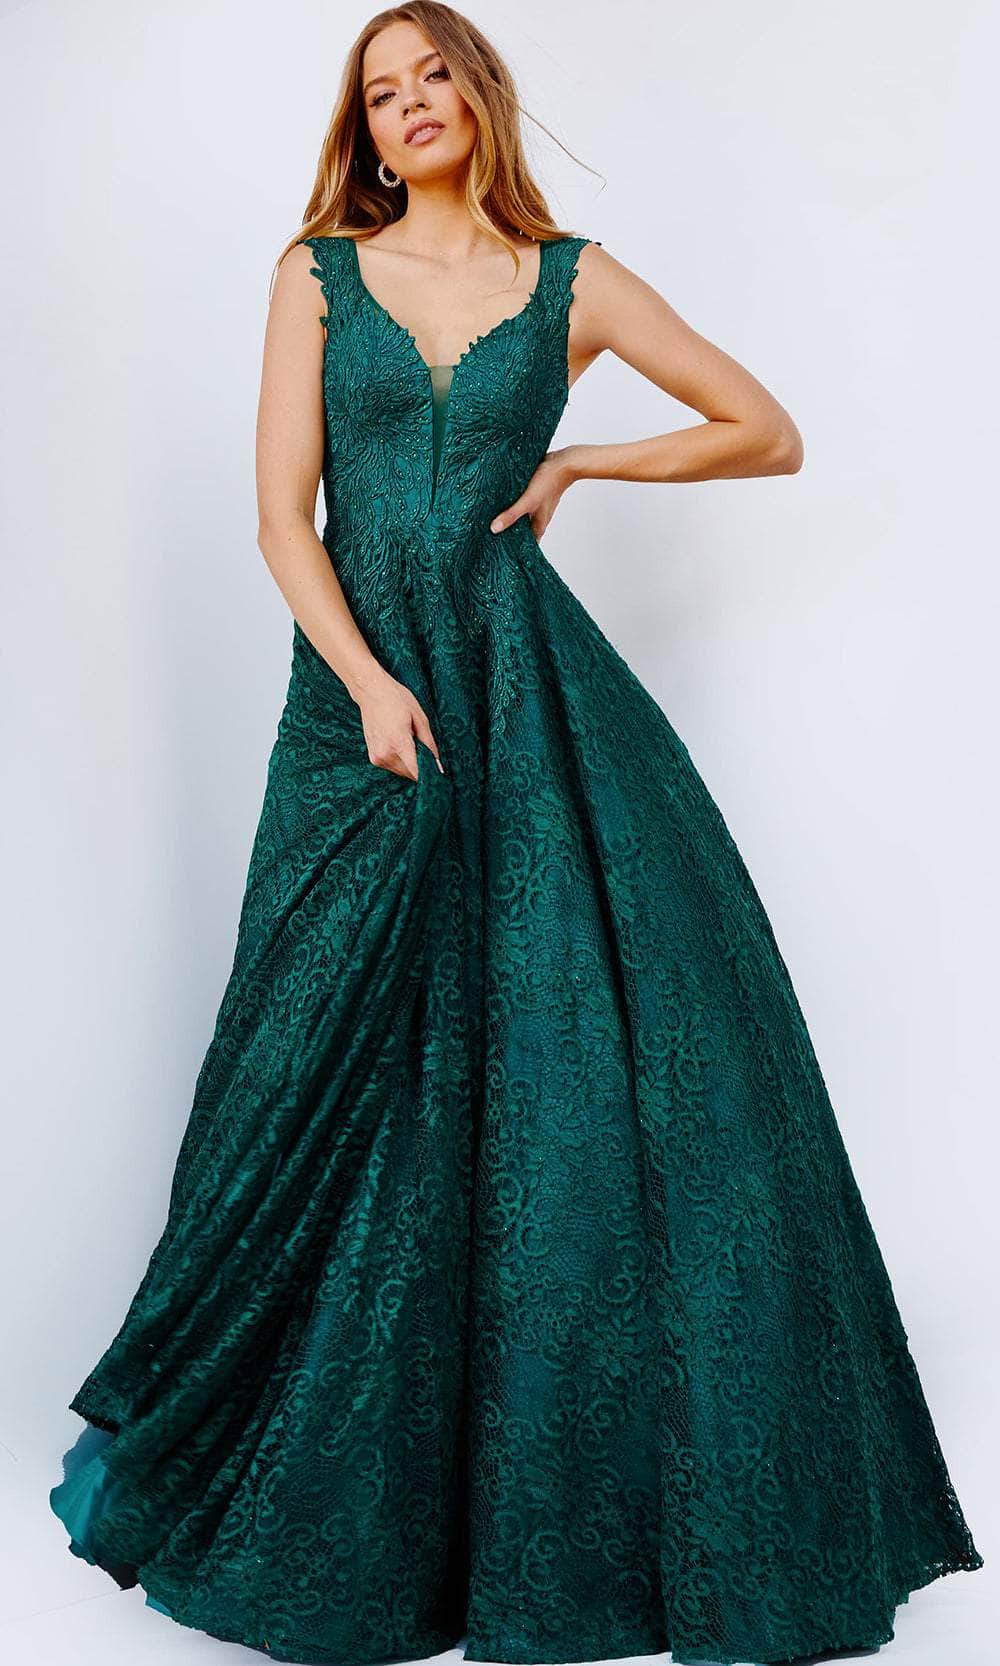 Jovani JVN09555 - Wide Strap Embroidered Ballgown Prom Dresses 00 / Emerald